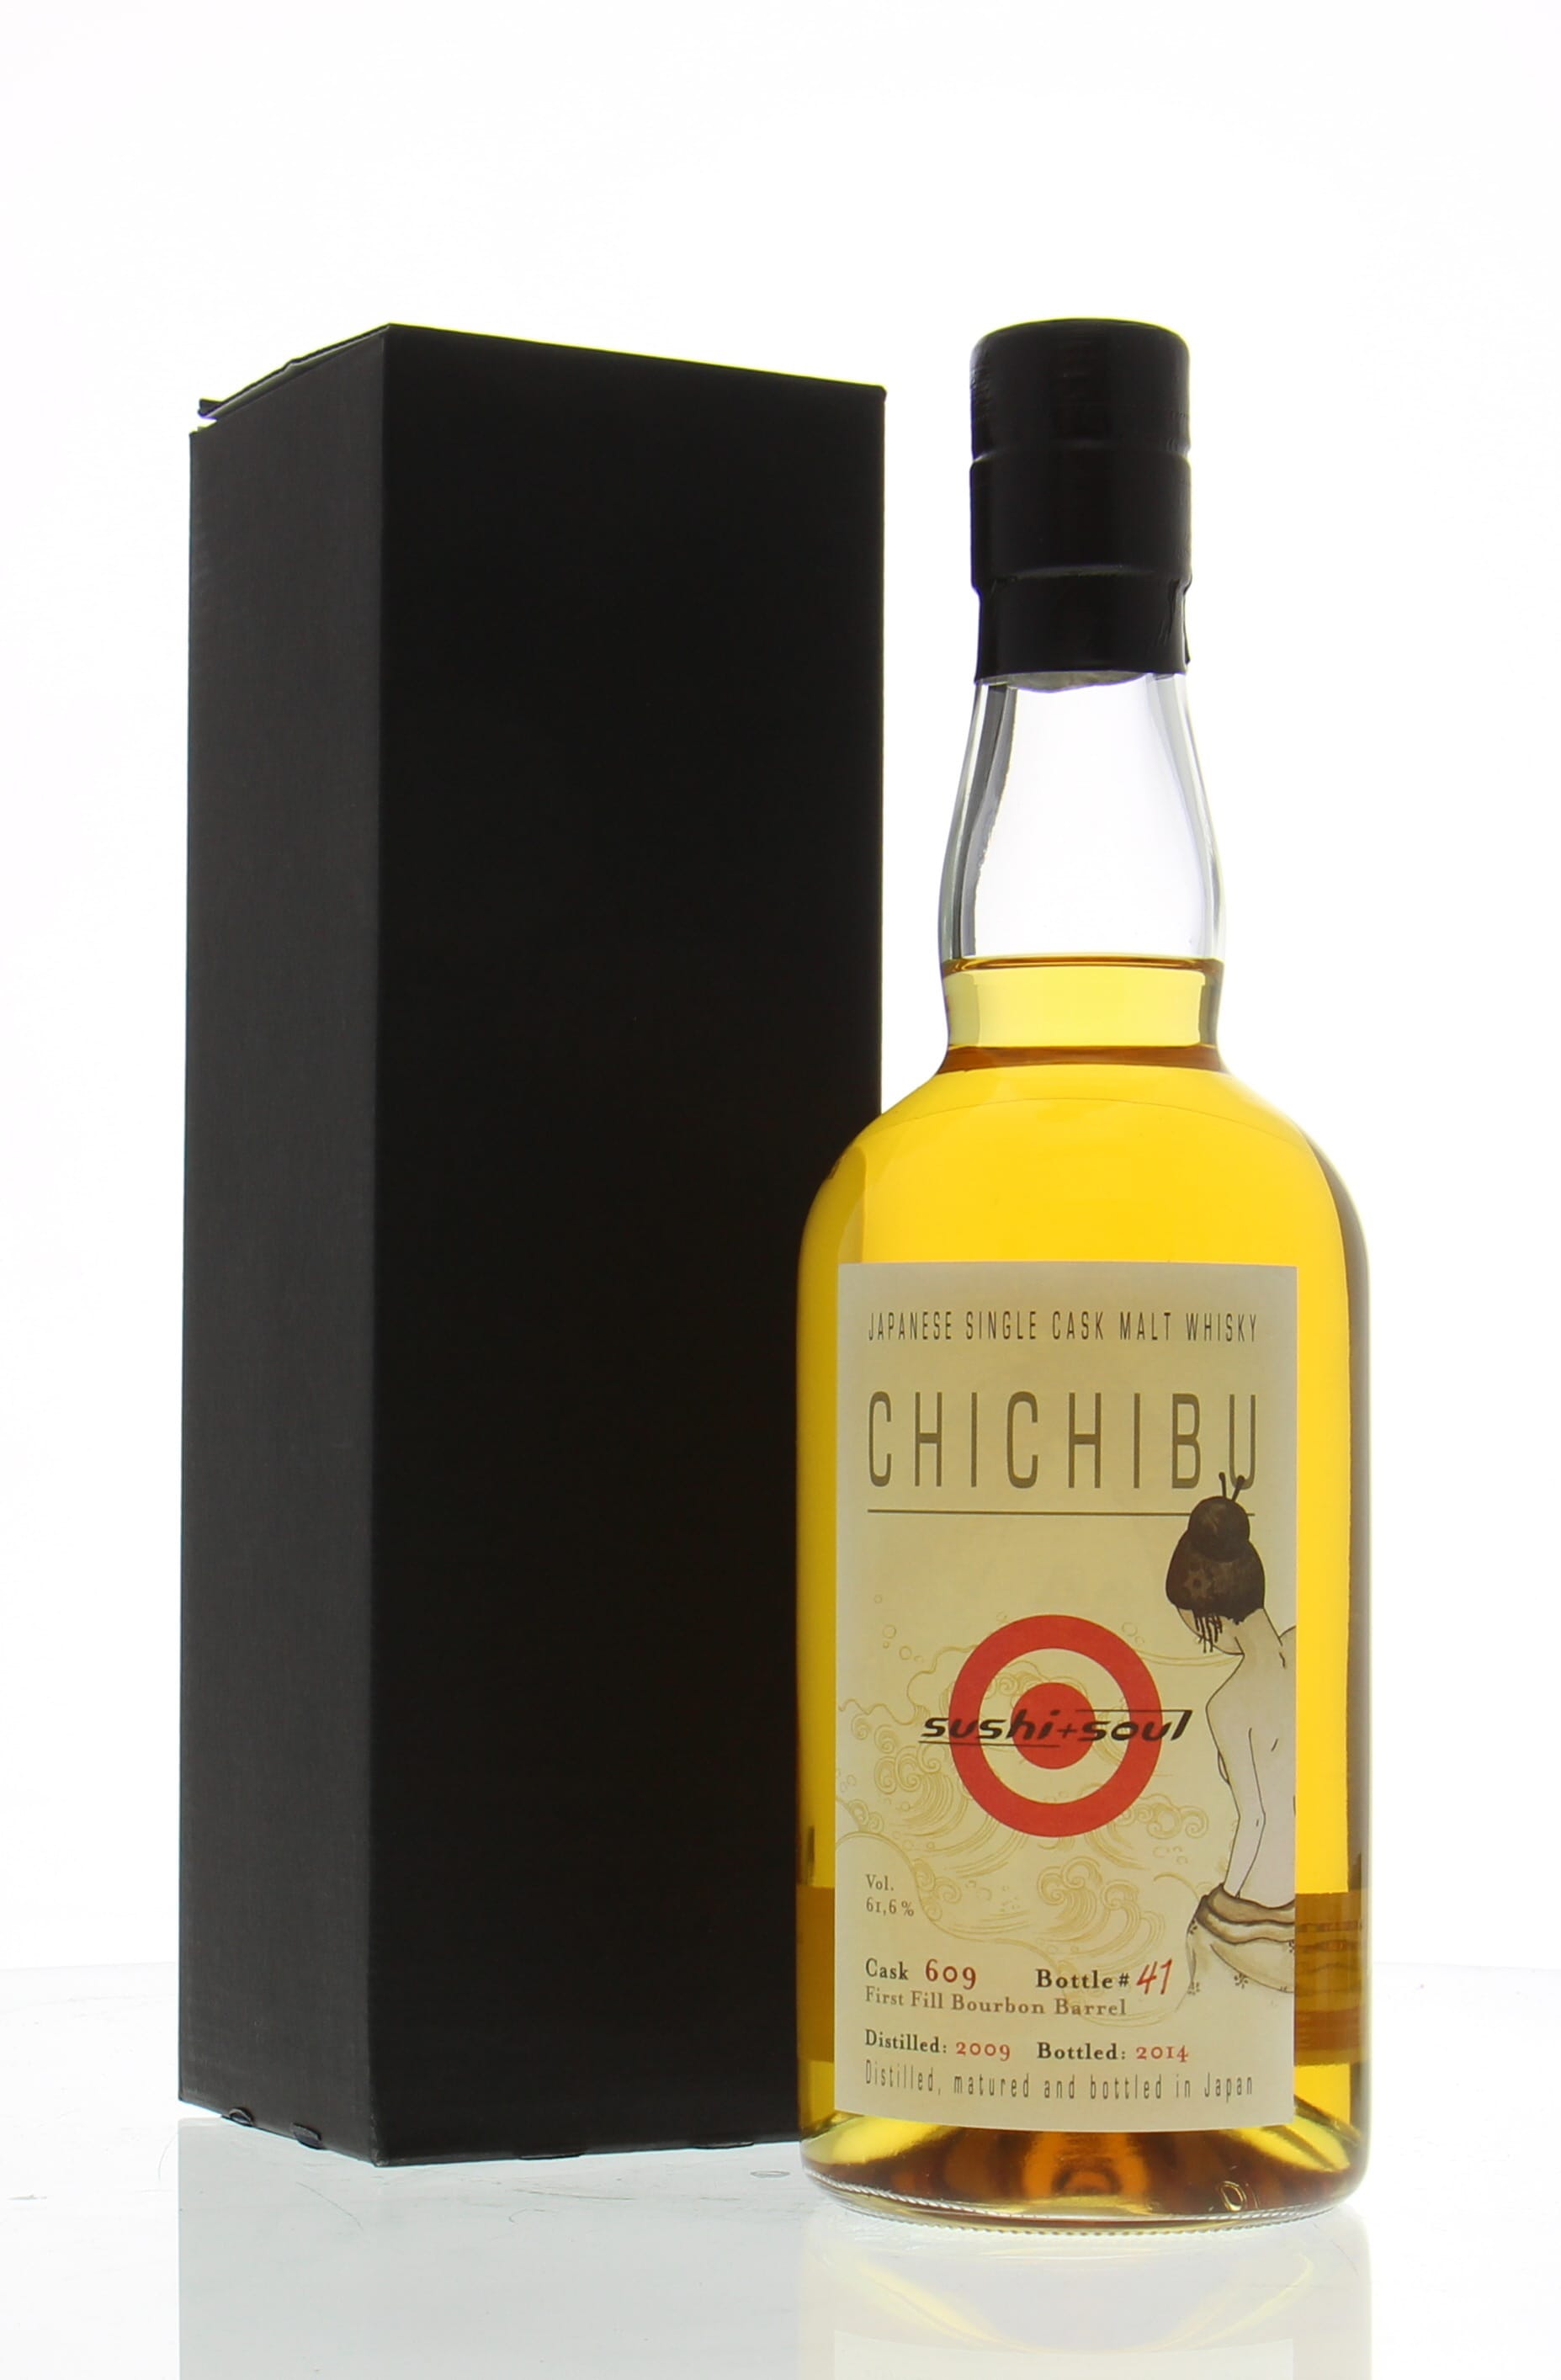 Chichibu - Ichiro's Malt Geisha label For Sushi+Soul Cask:609 61.6% 2009